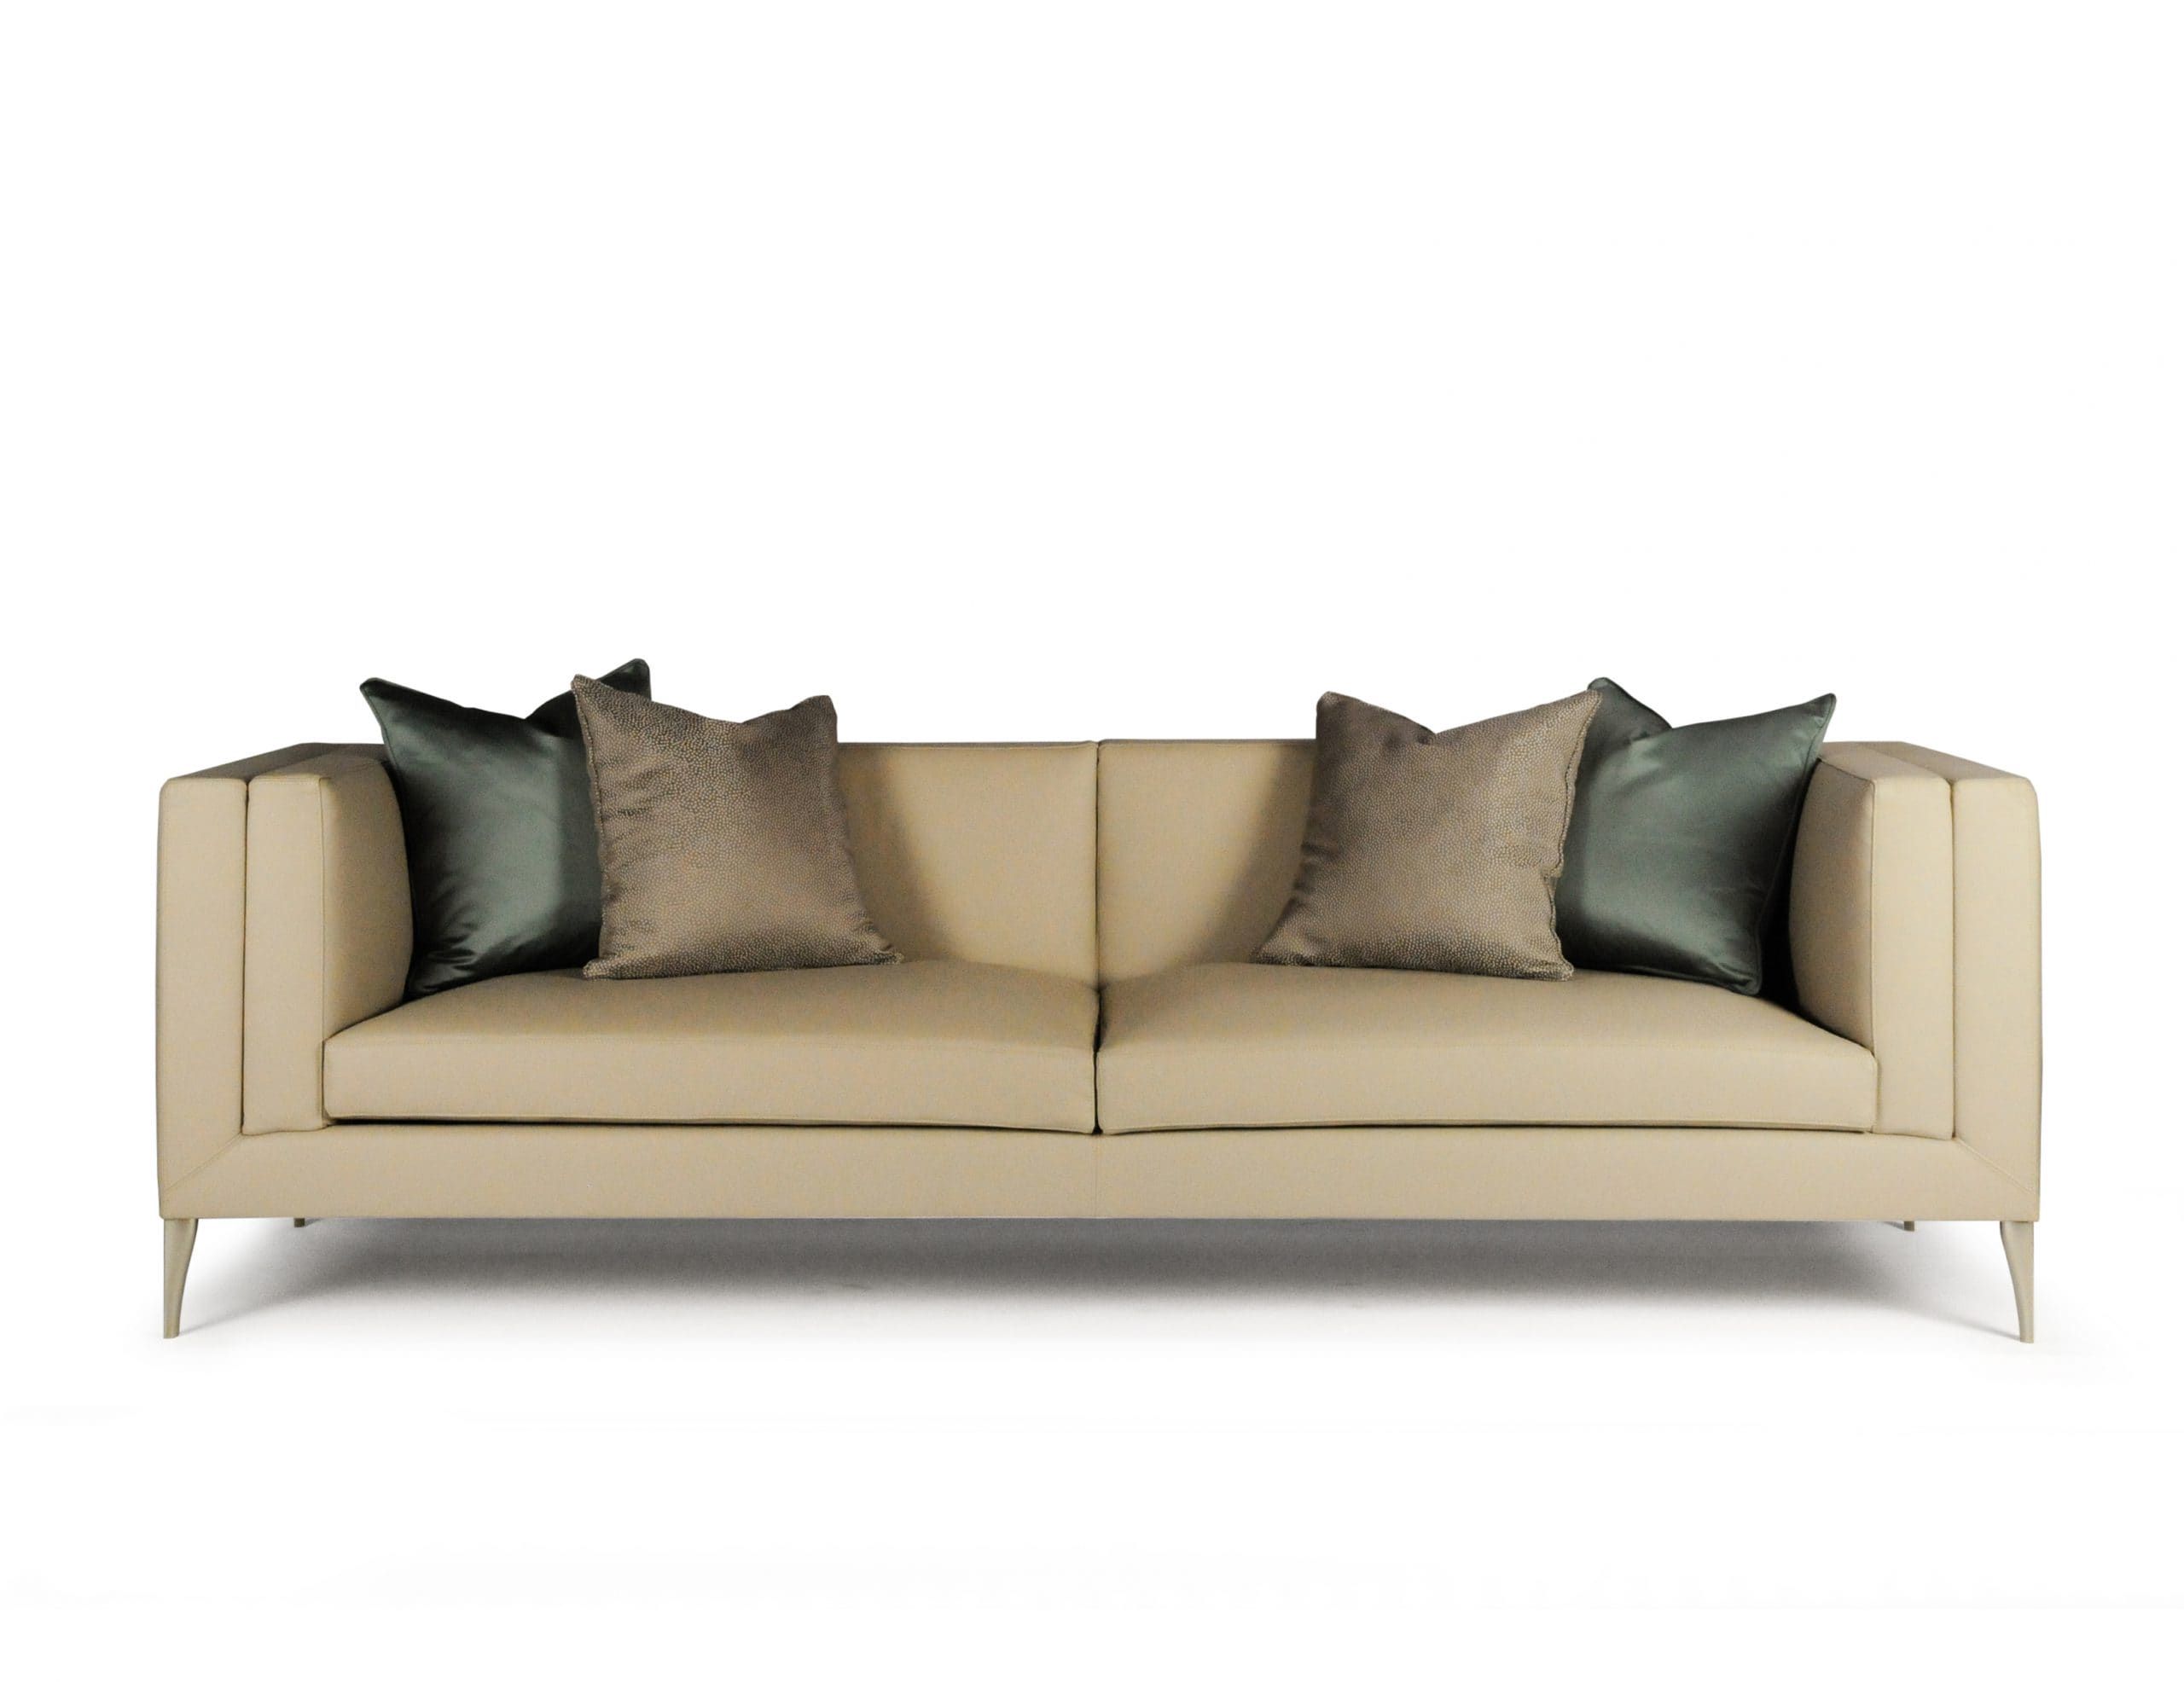 Elegance Sofa modern luxury upholstery with grey leather